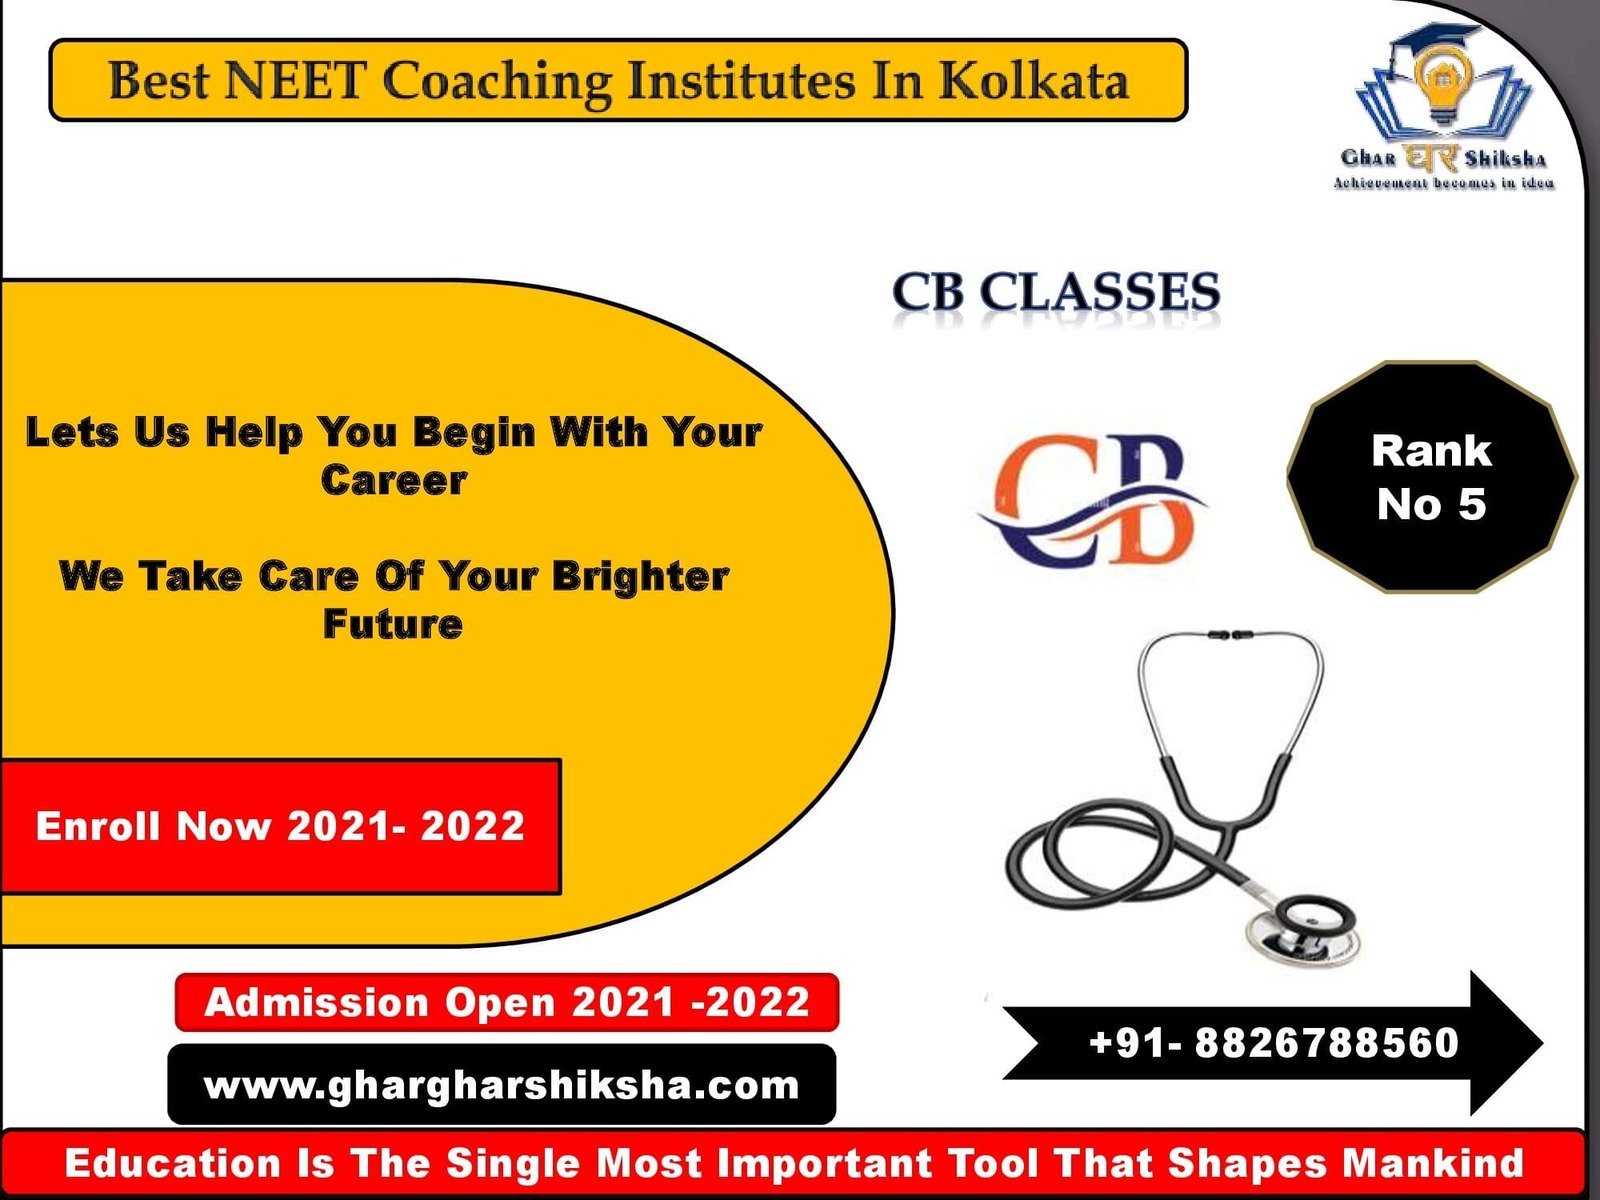 CB Classes NEET Coaching in Kolkata